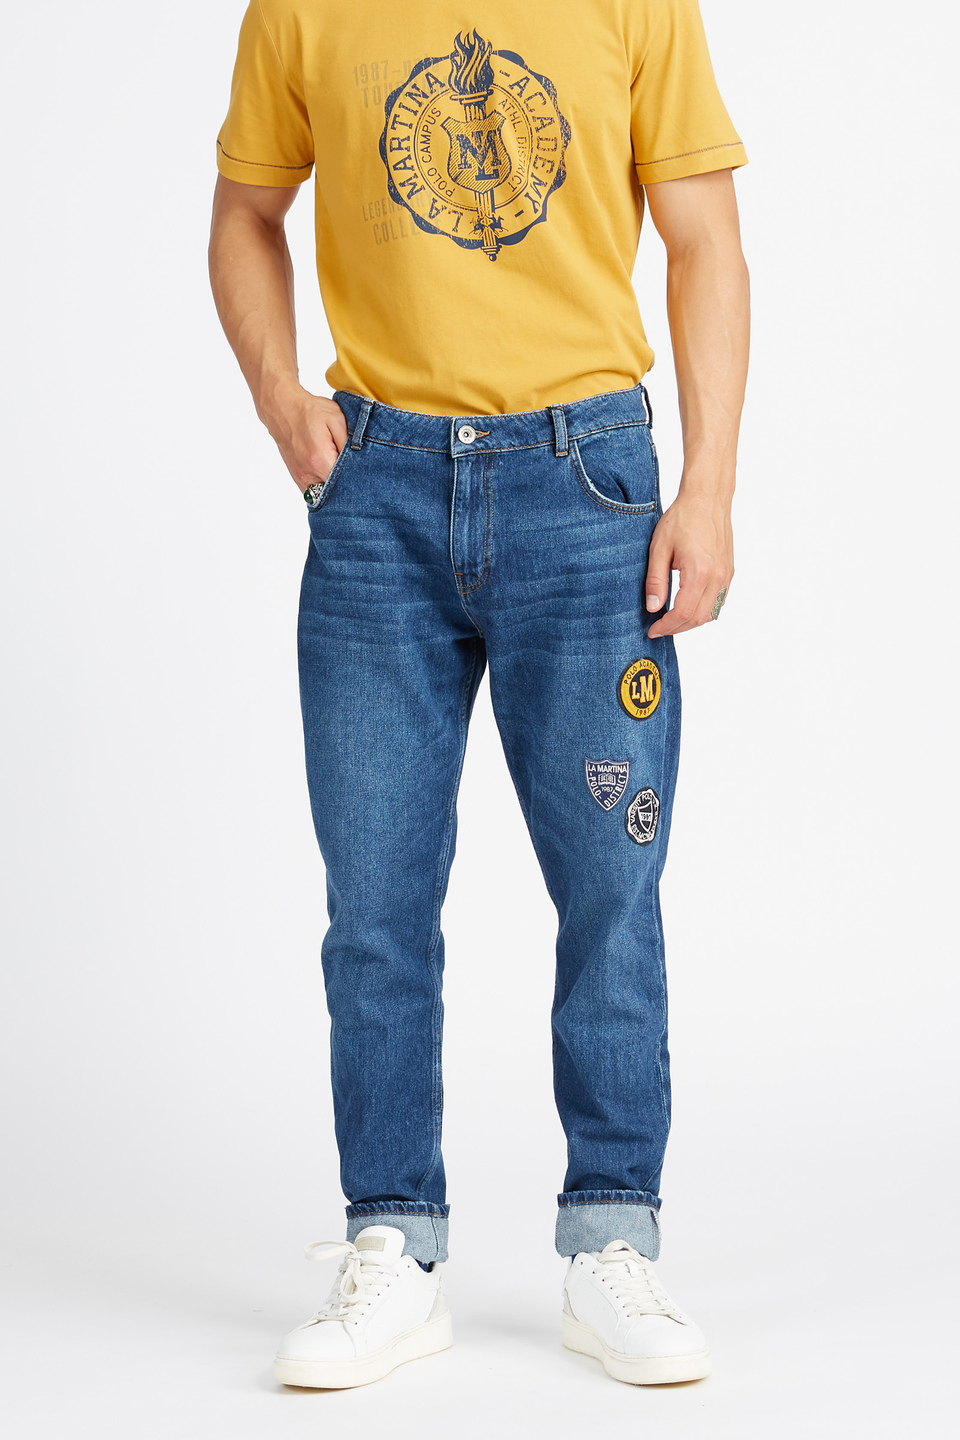 Pantalone jeans denim uomo 5 tasche e multi logo Polo Academy - Viggo | La Martina - Official Online Shop